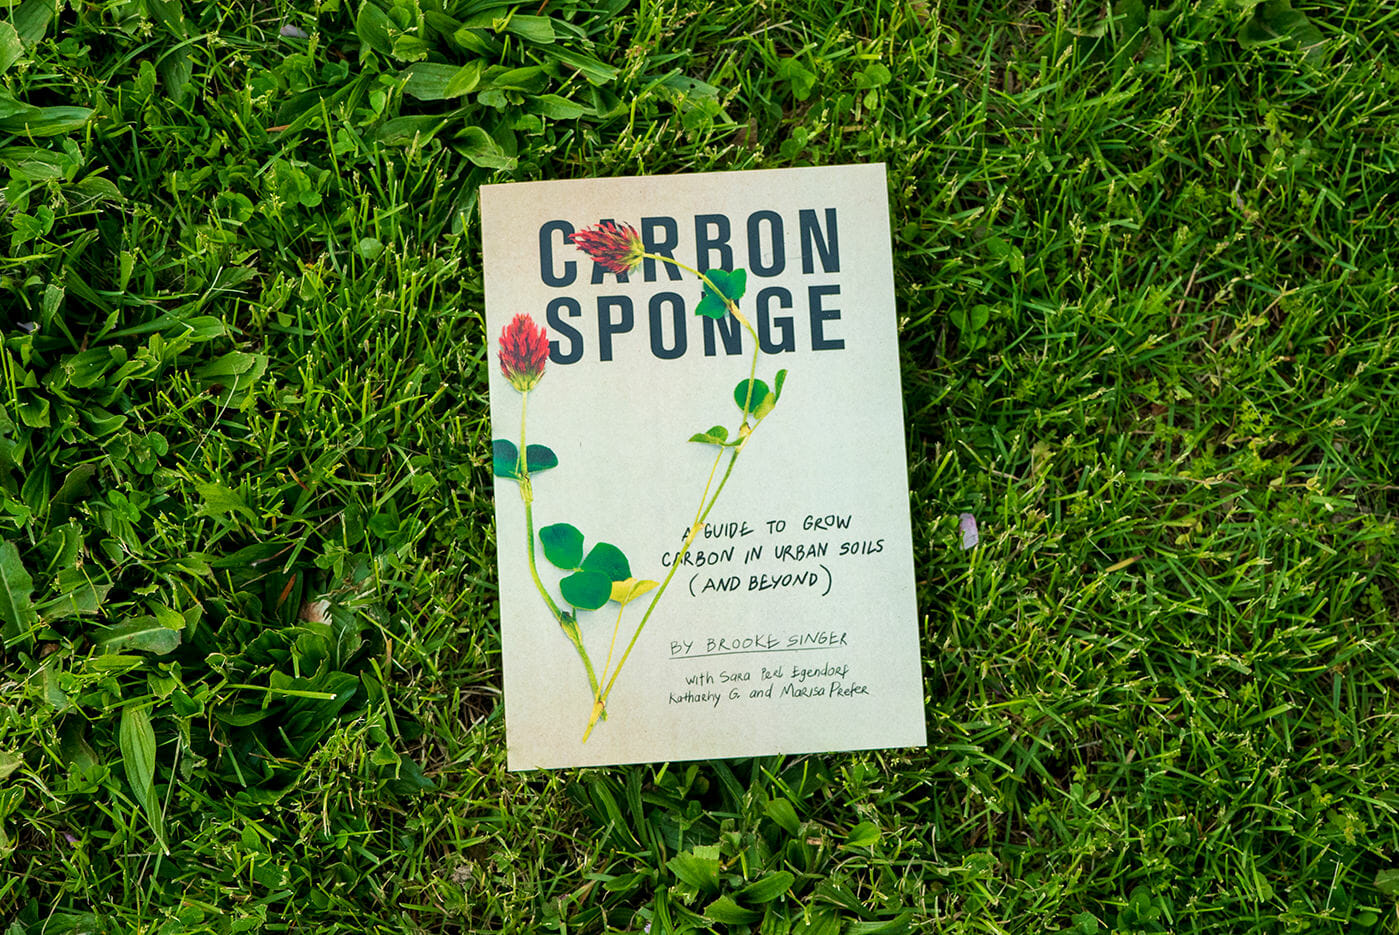 Brooke Singer's Carbon Sponge Book sitting on green grass